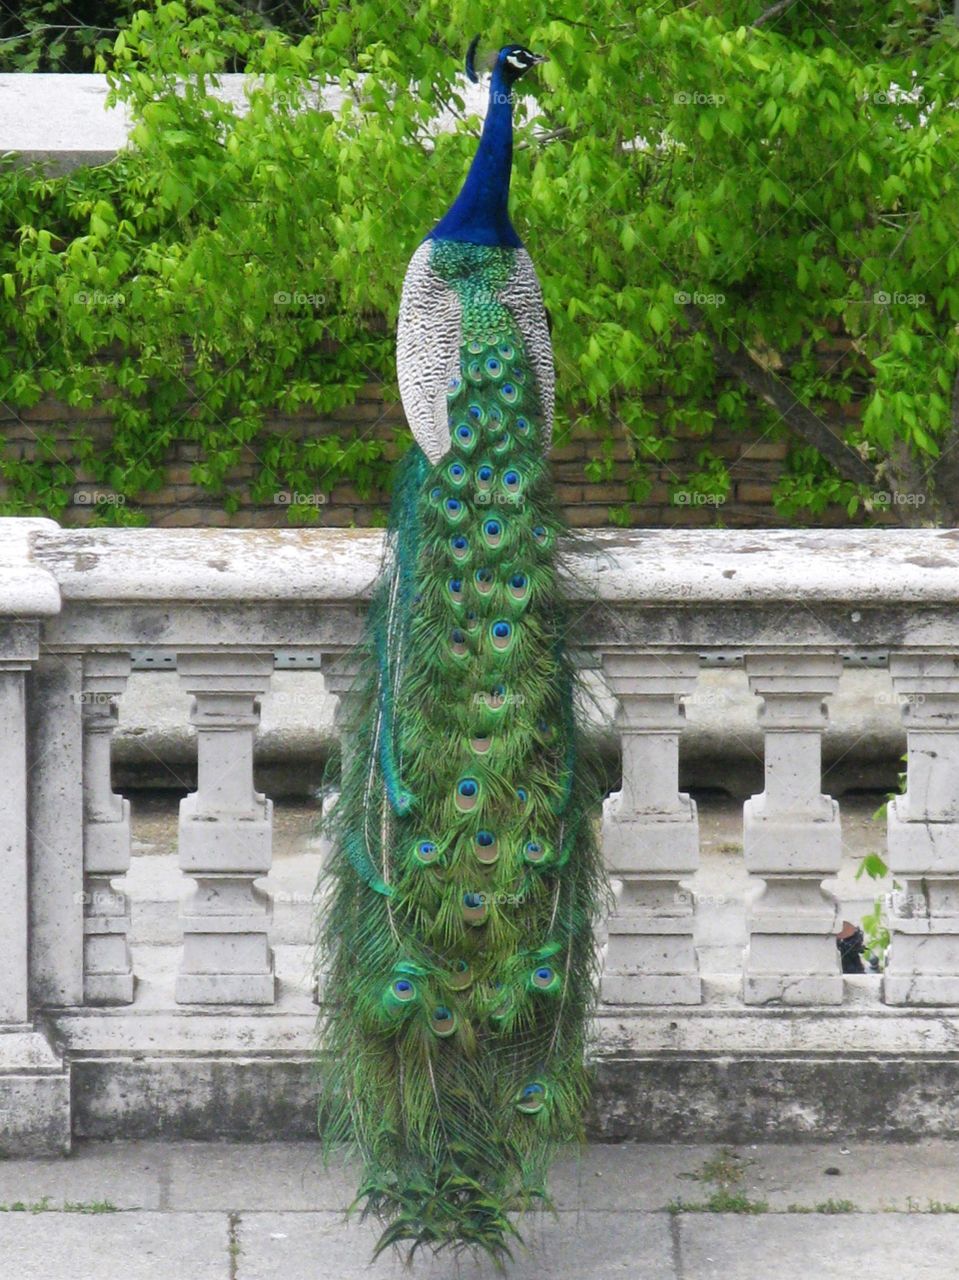 Wild peacock in Spain